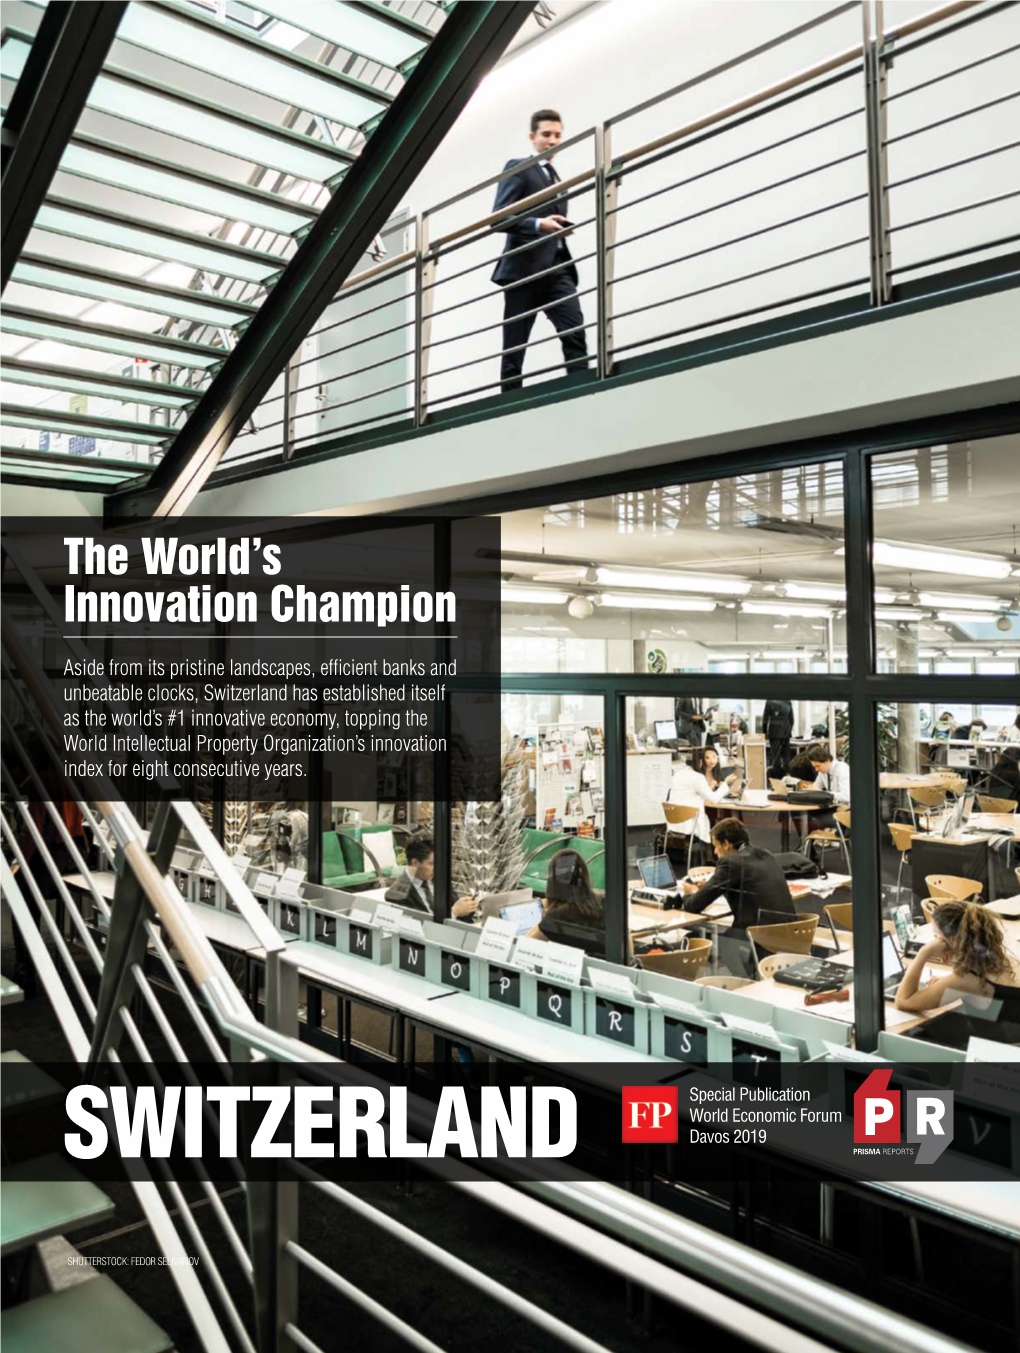 SWITZERLAND: the World's Innovation Champion